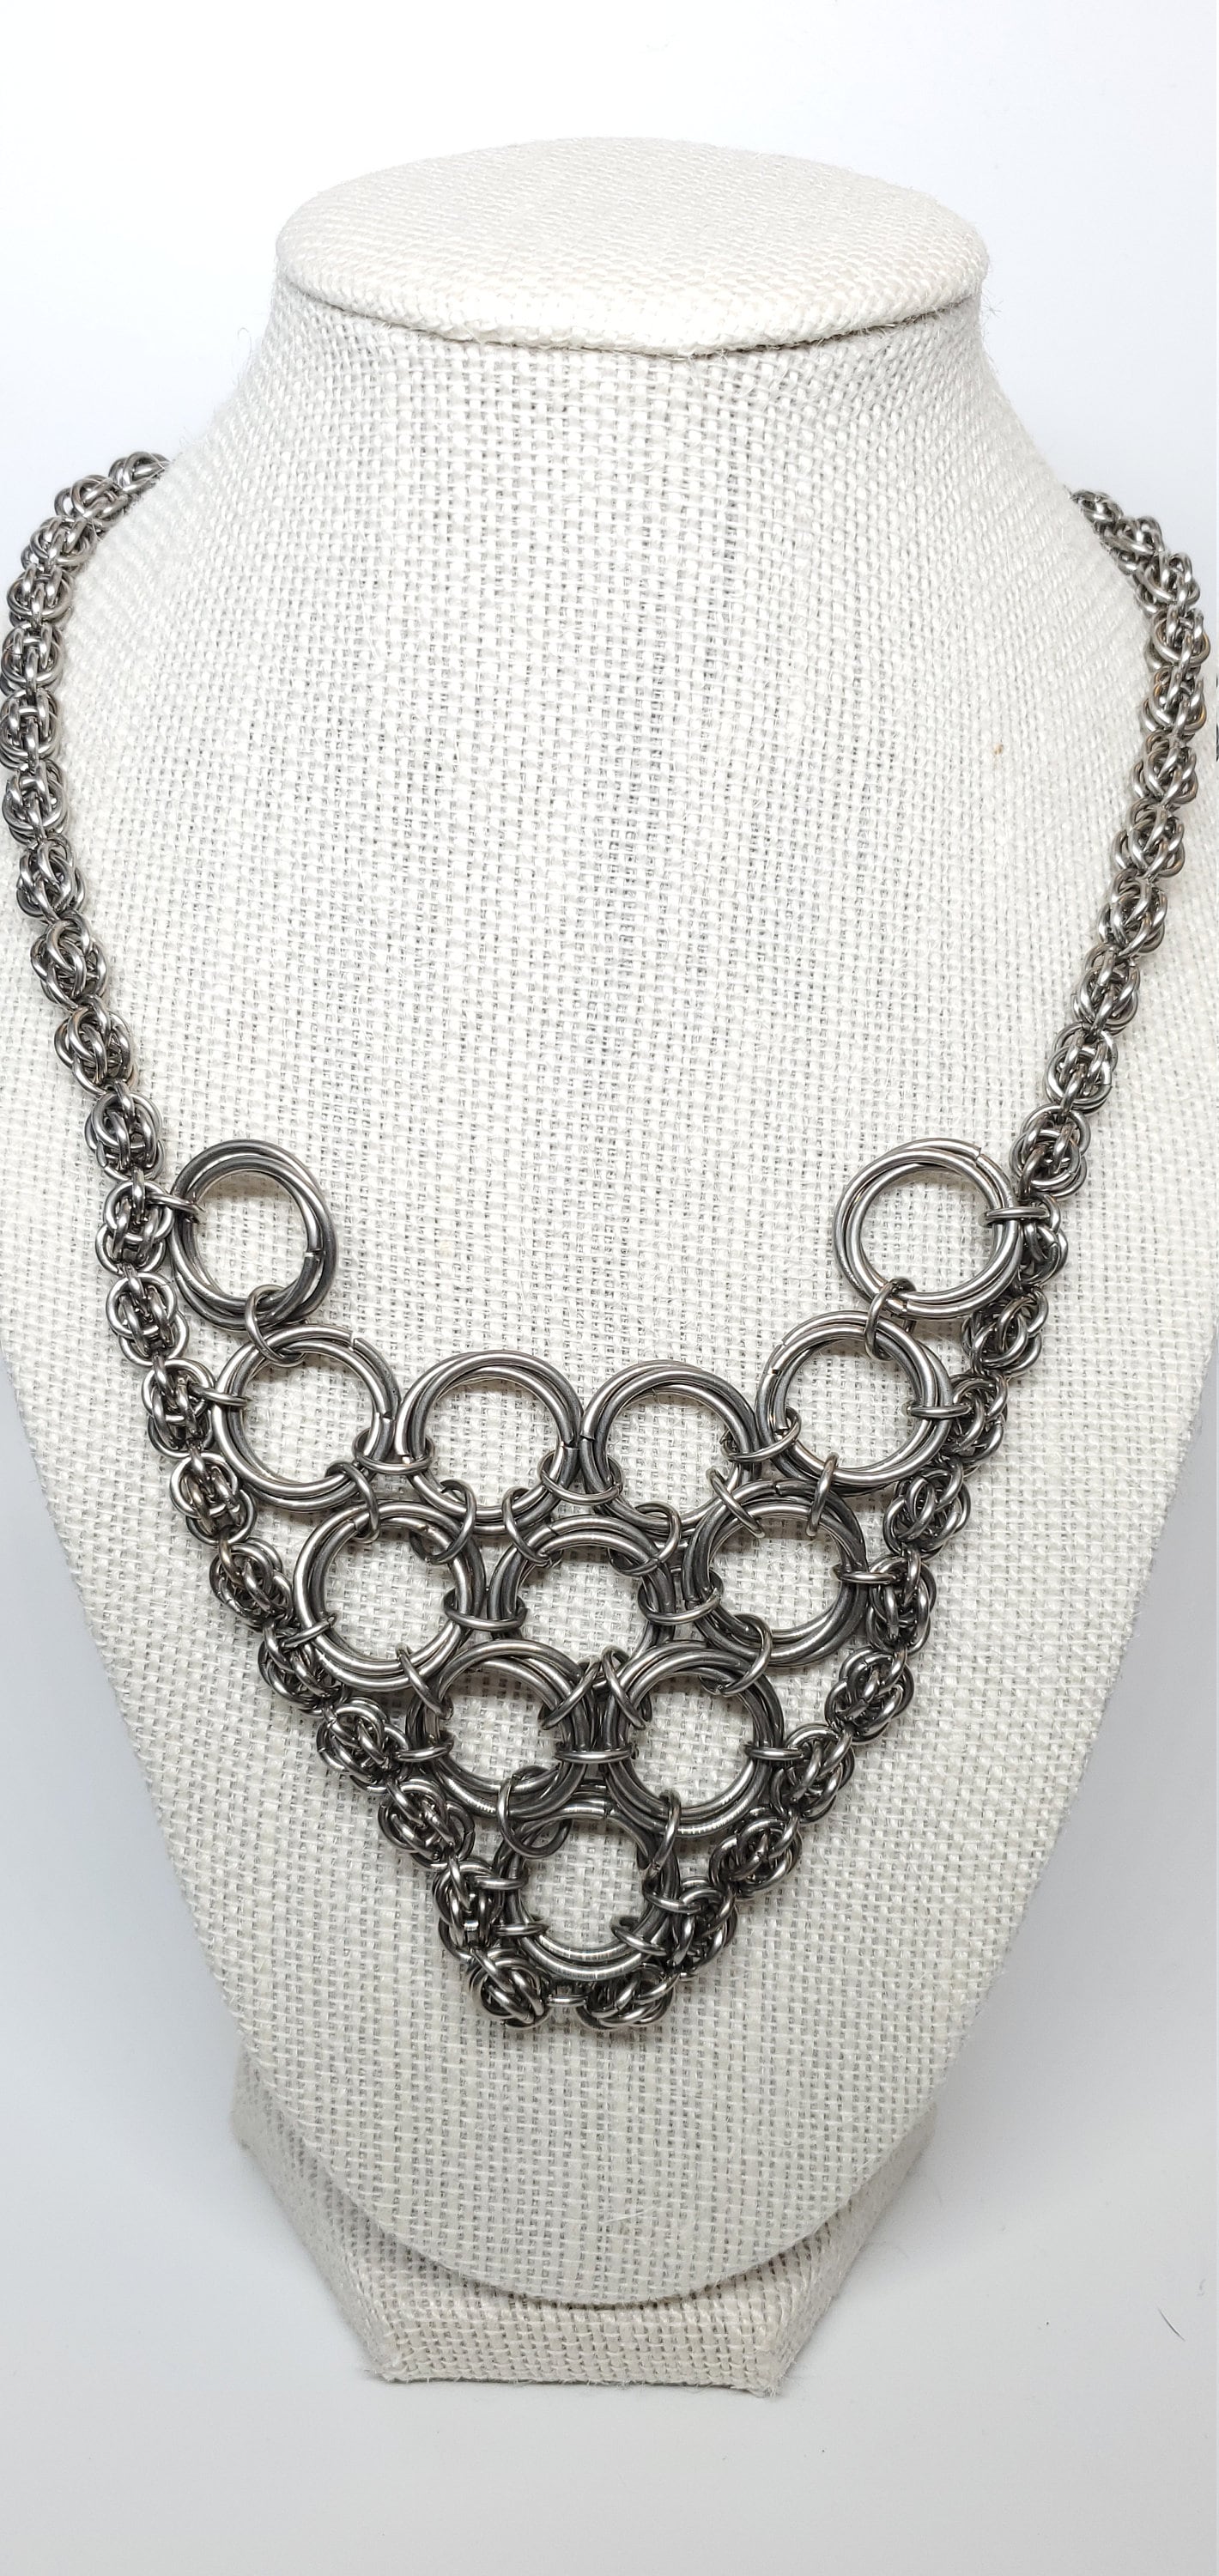 Stainless Steel Statement Necklace - Bib chainmaille Necklace - Gifts for Her - Statement Bib Necklace For Women